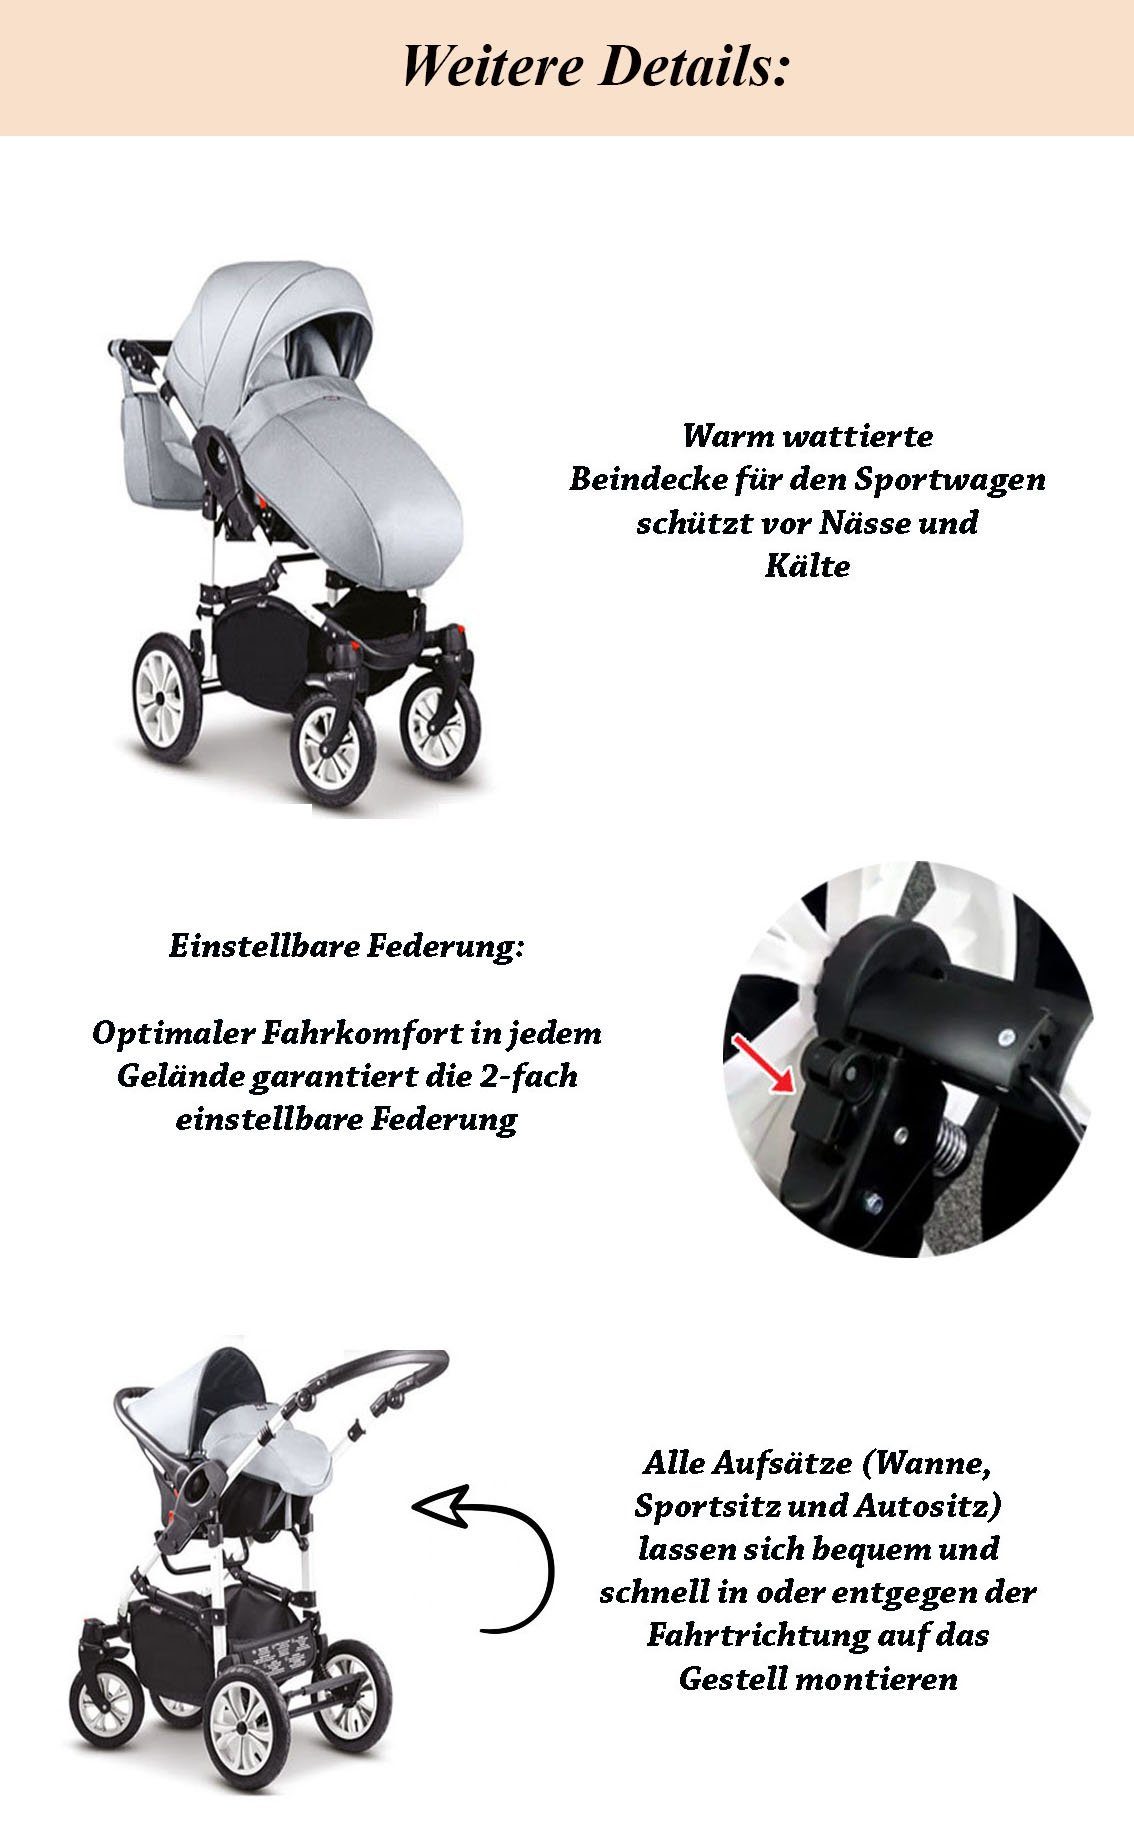 in Kombi-Kinderwagen 16 3 in Farben Teile 1 - Cosmo babies-on-wheels 41 Kinderwagen-Set - Rosa-Weiß